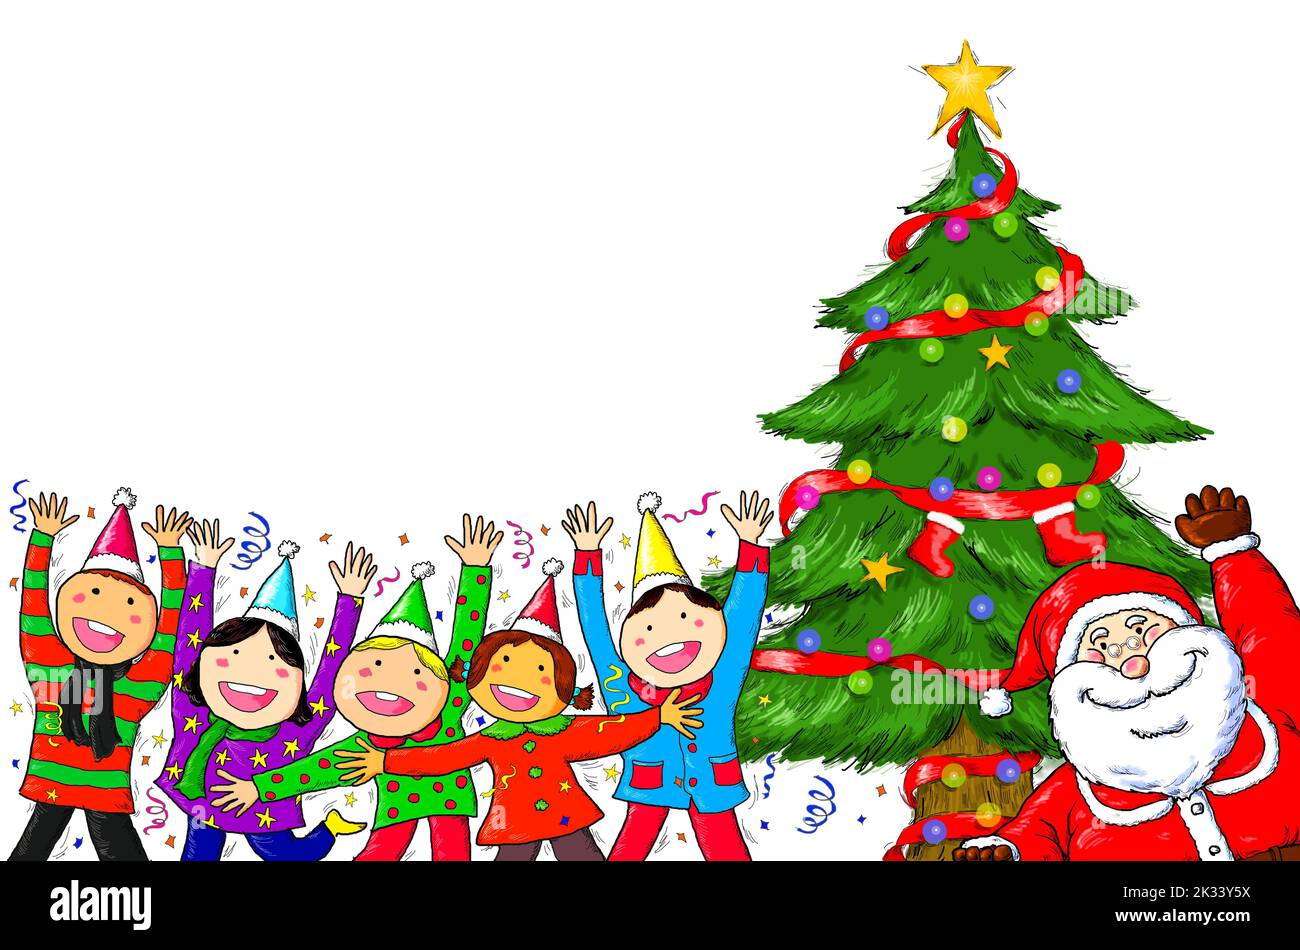 Digital drawing illustration of Merry Christmas. Stock Photo